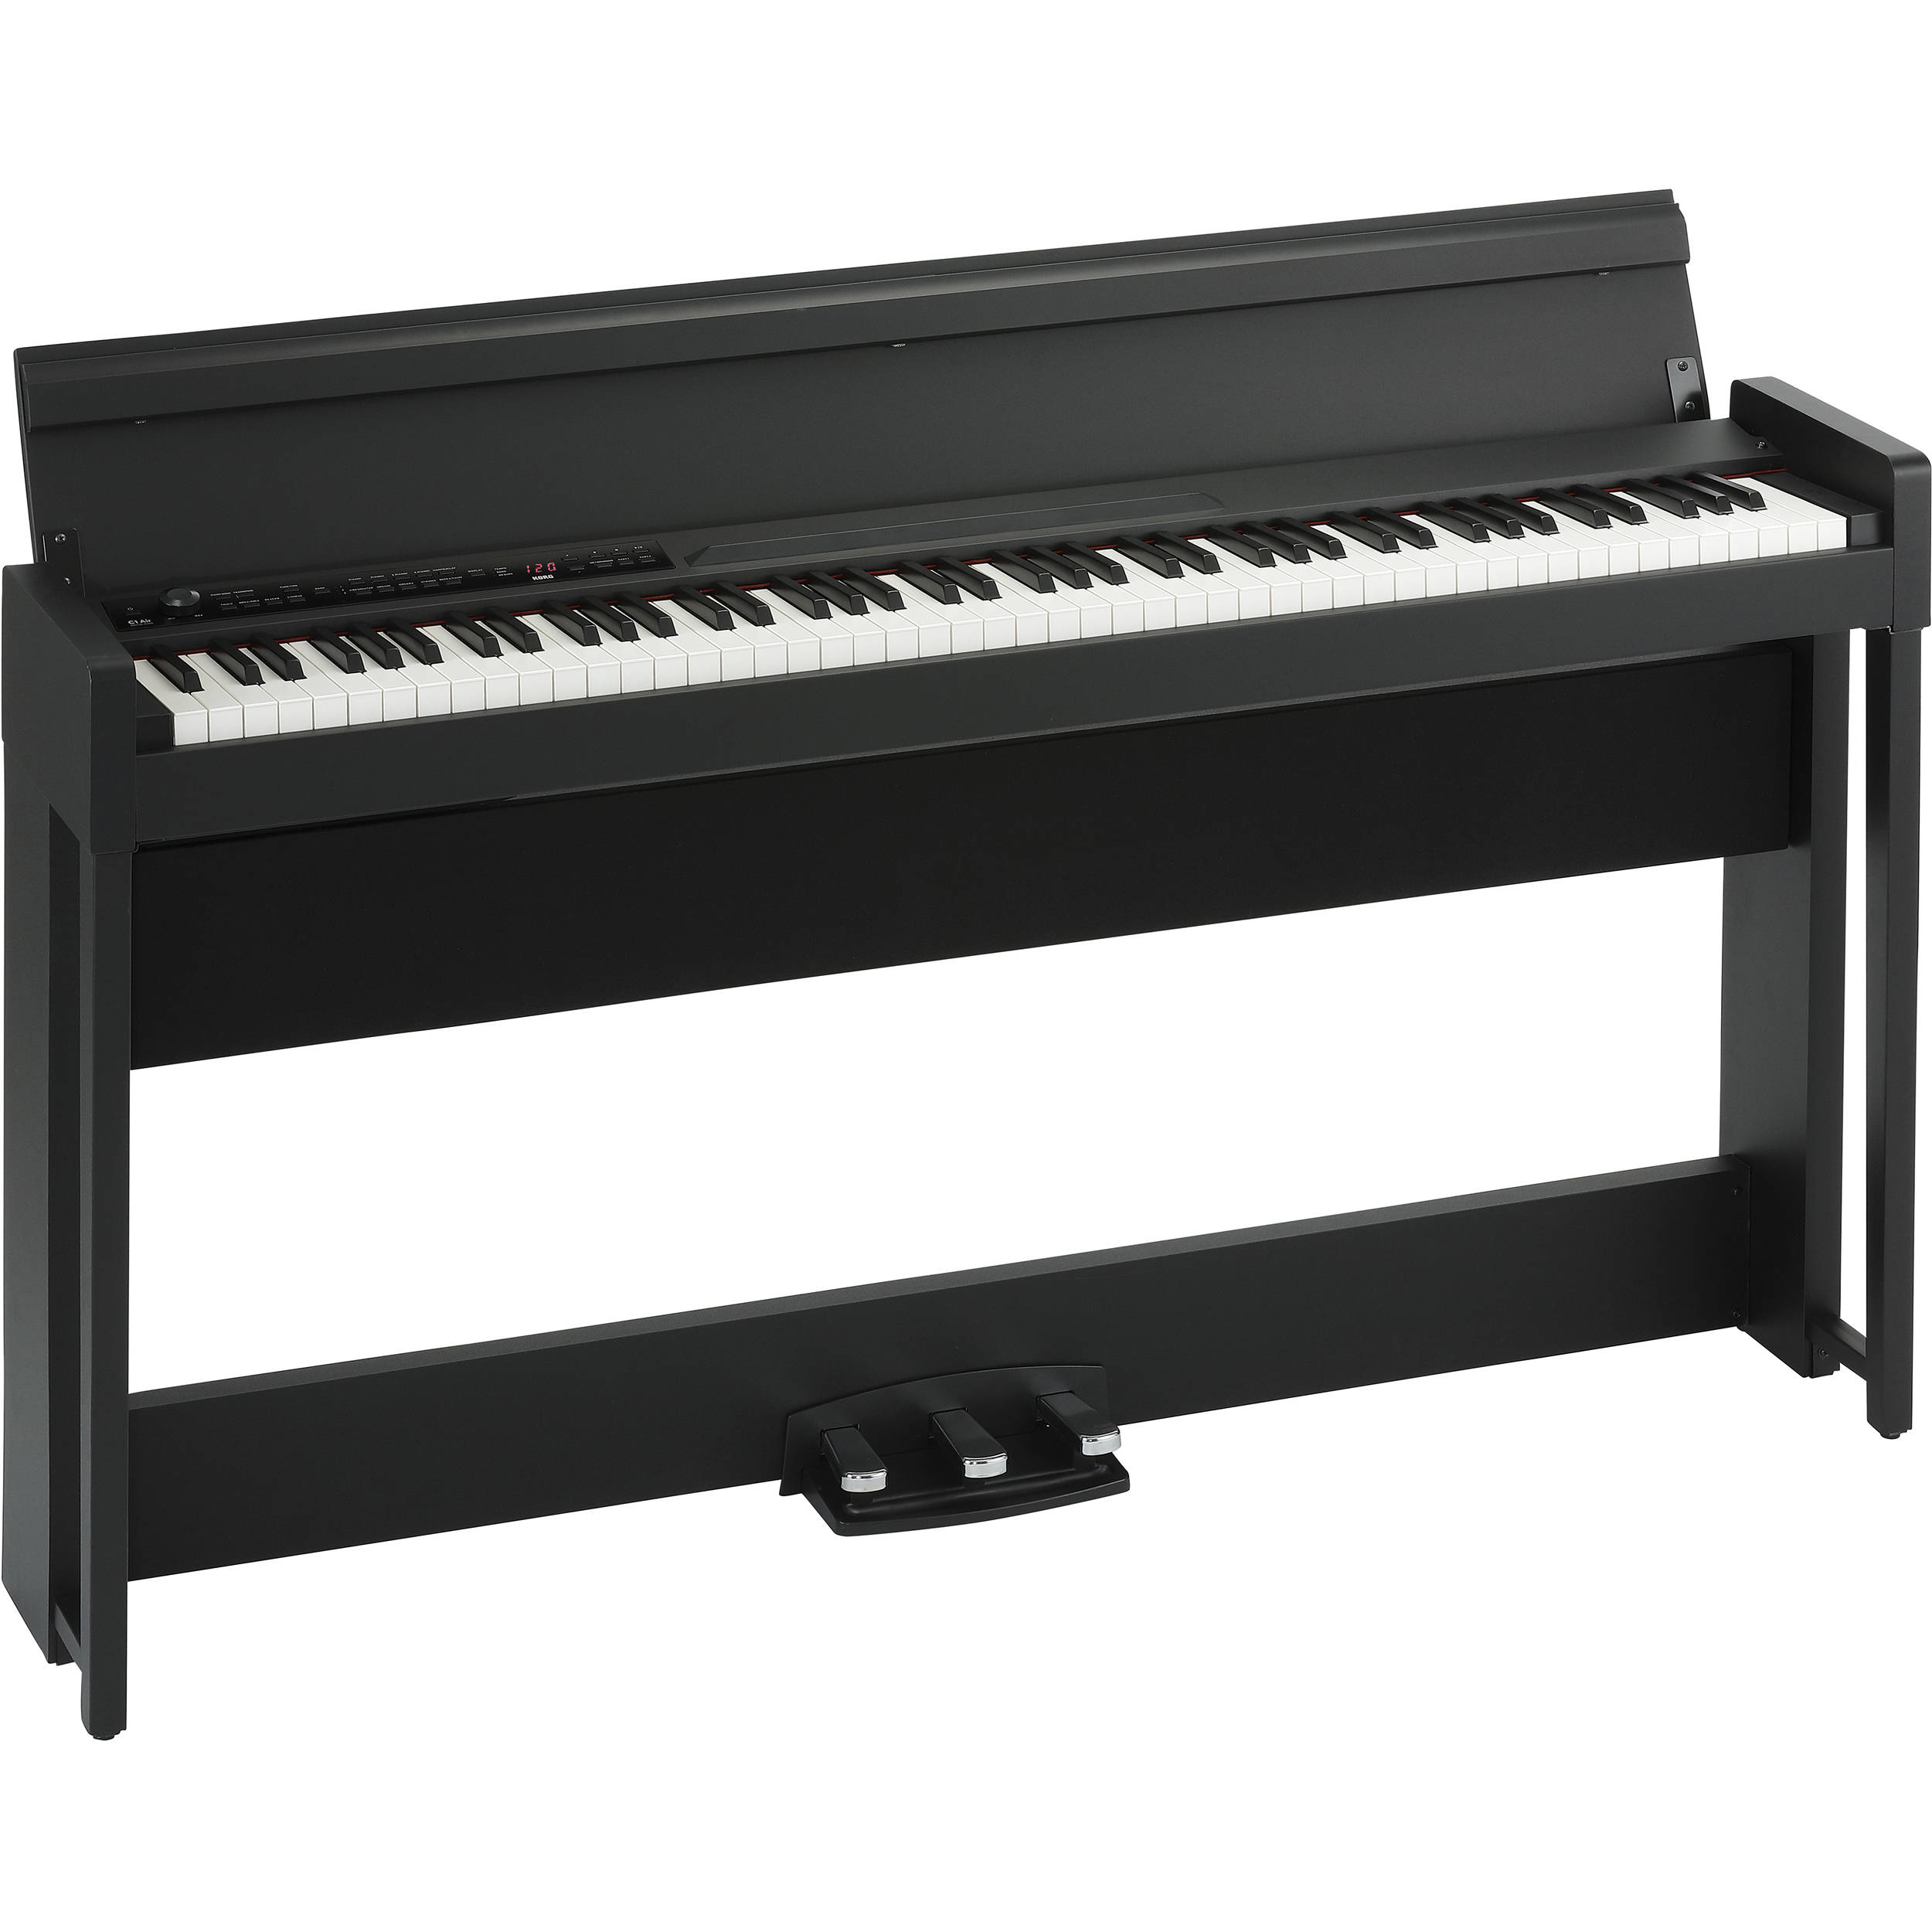 Korg C1 Air Digital Piano with Bluetooth - Black Color 88-key Digital Piano 